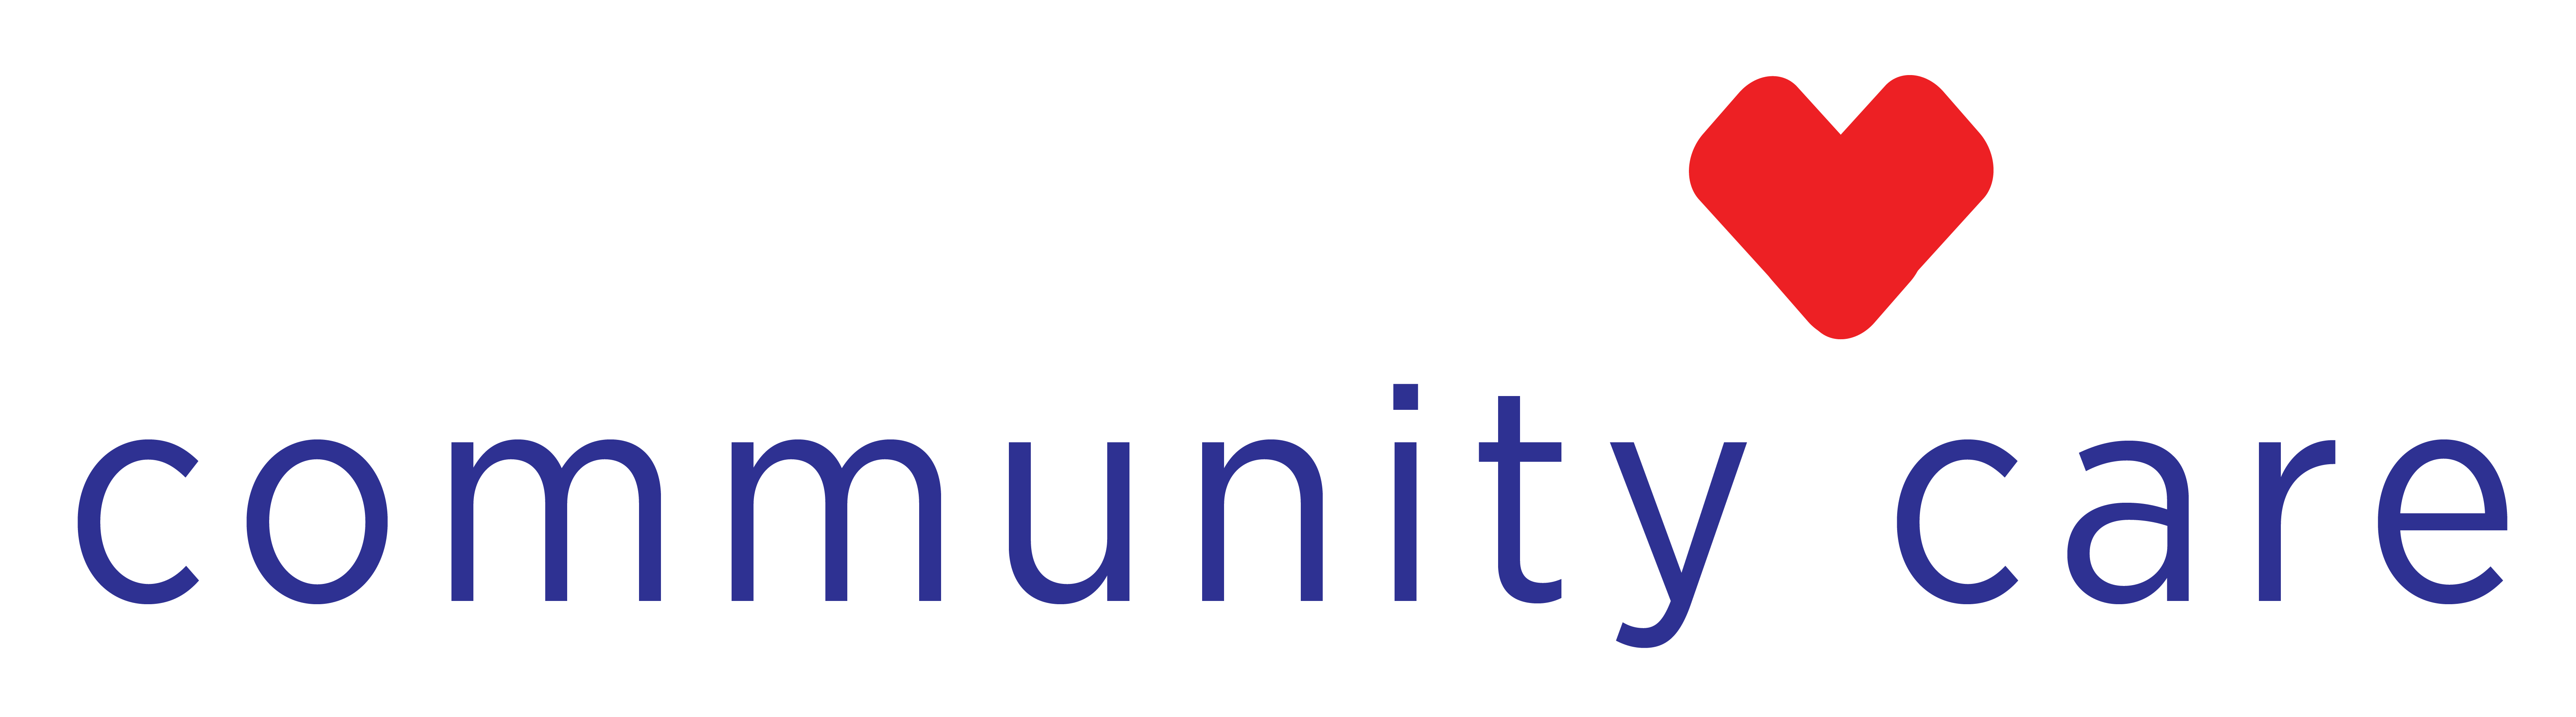 Logo for Community Care theme